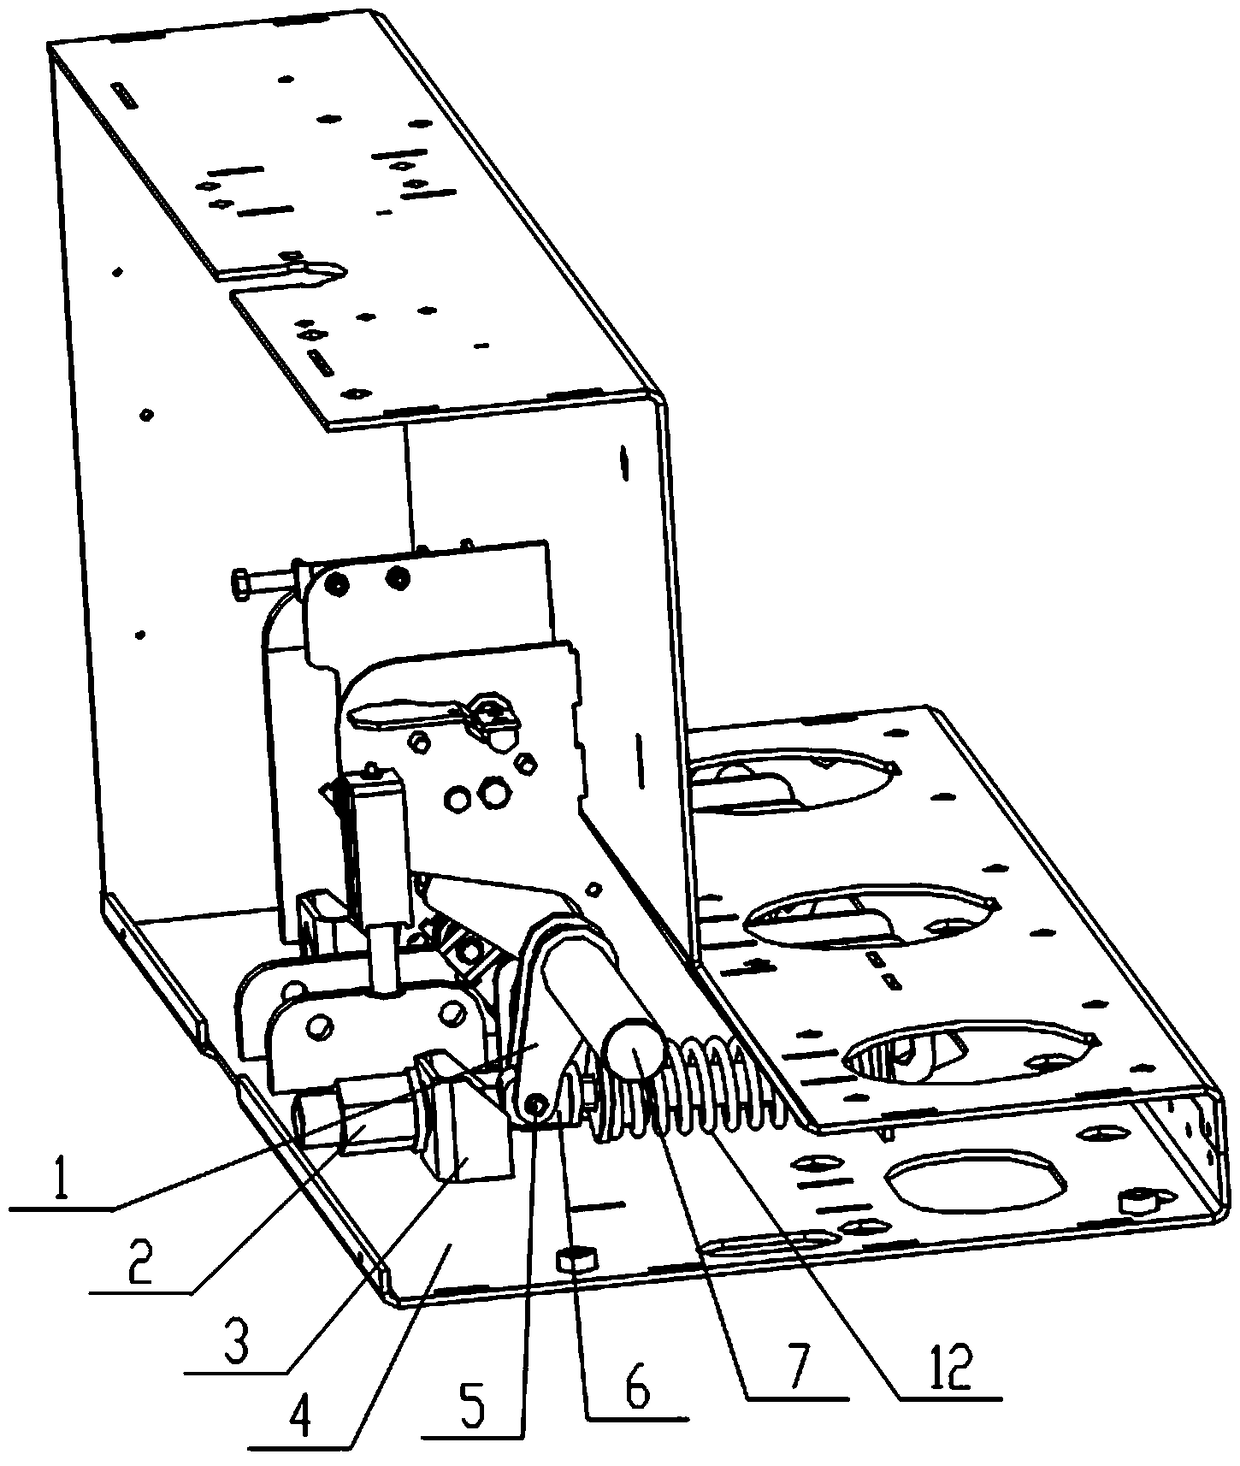 Spring operating mechanism and circuit breaker